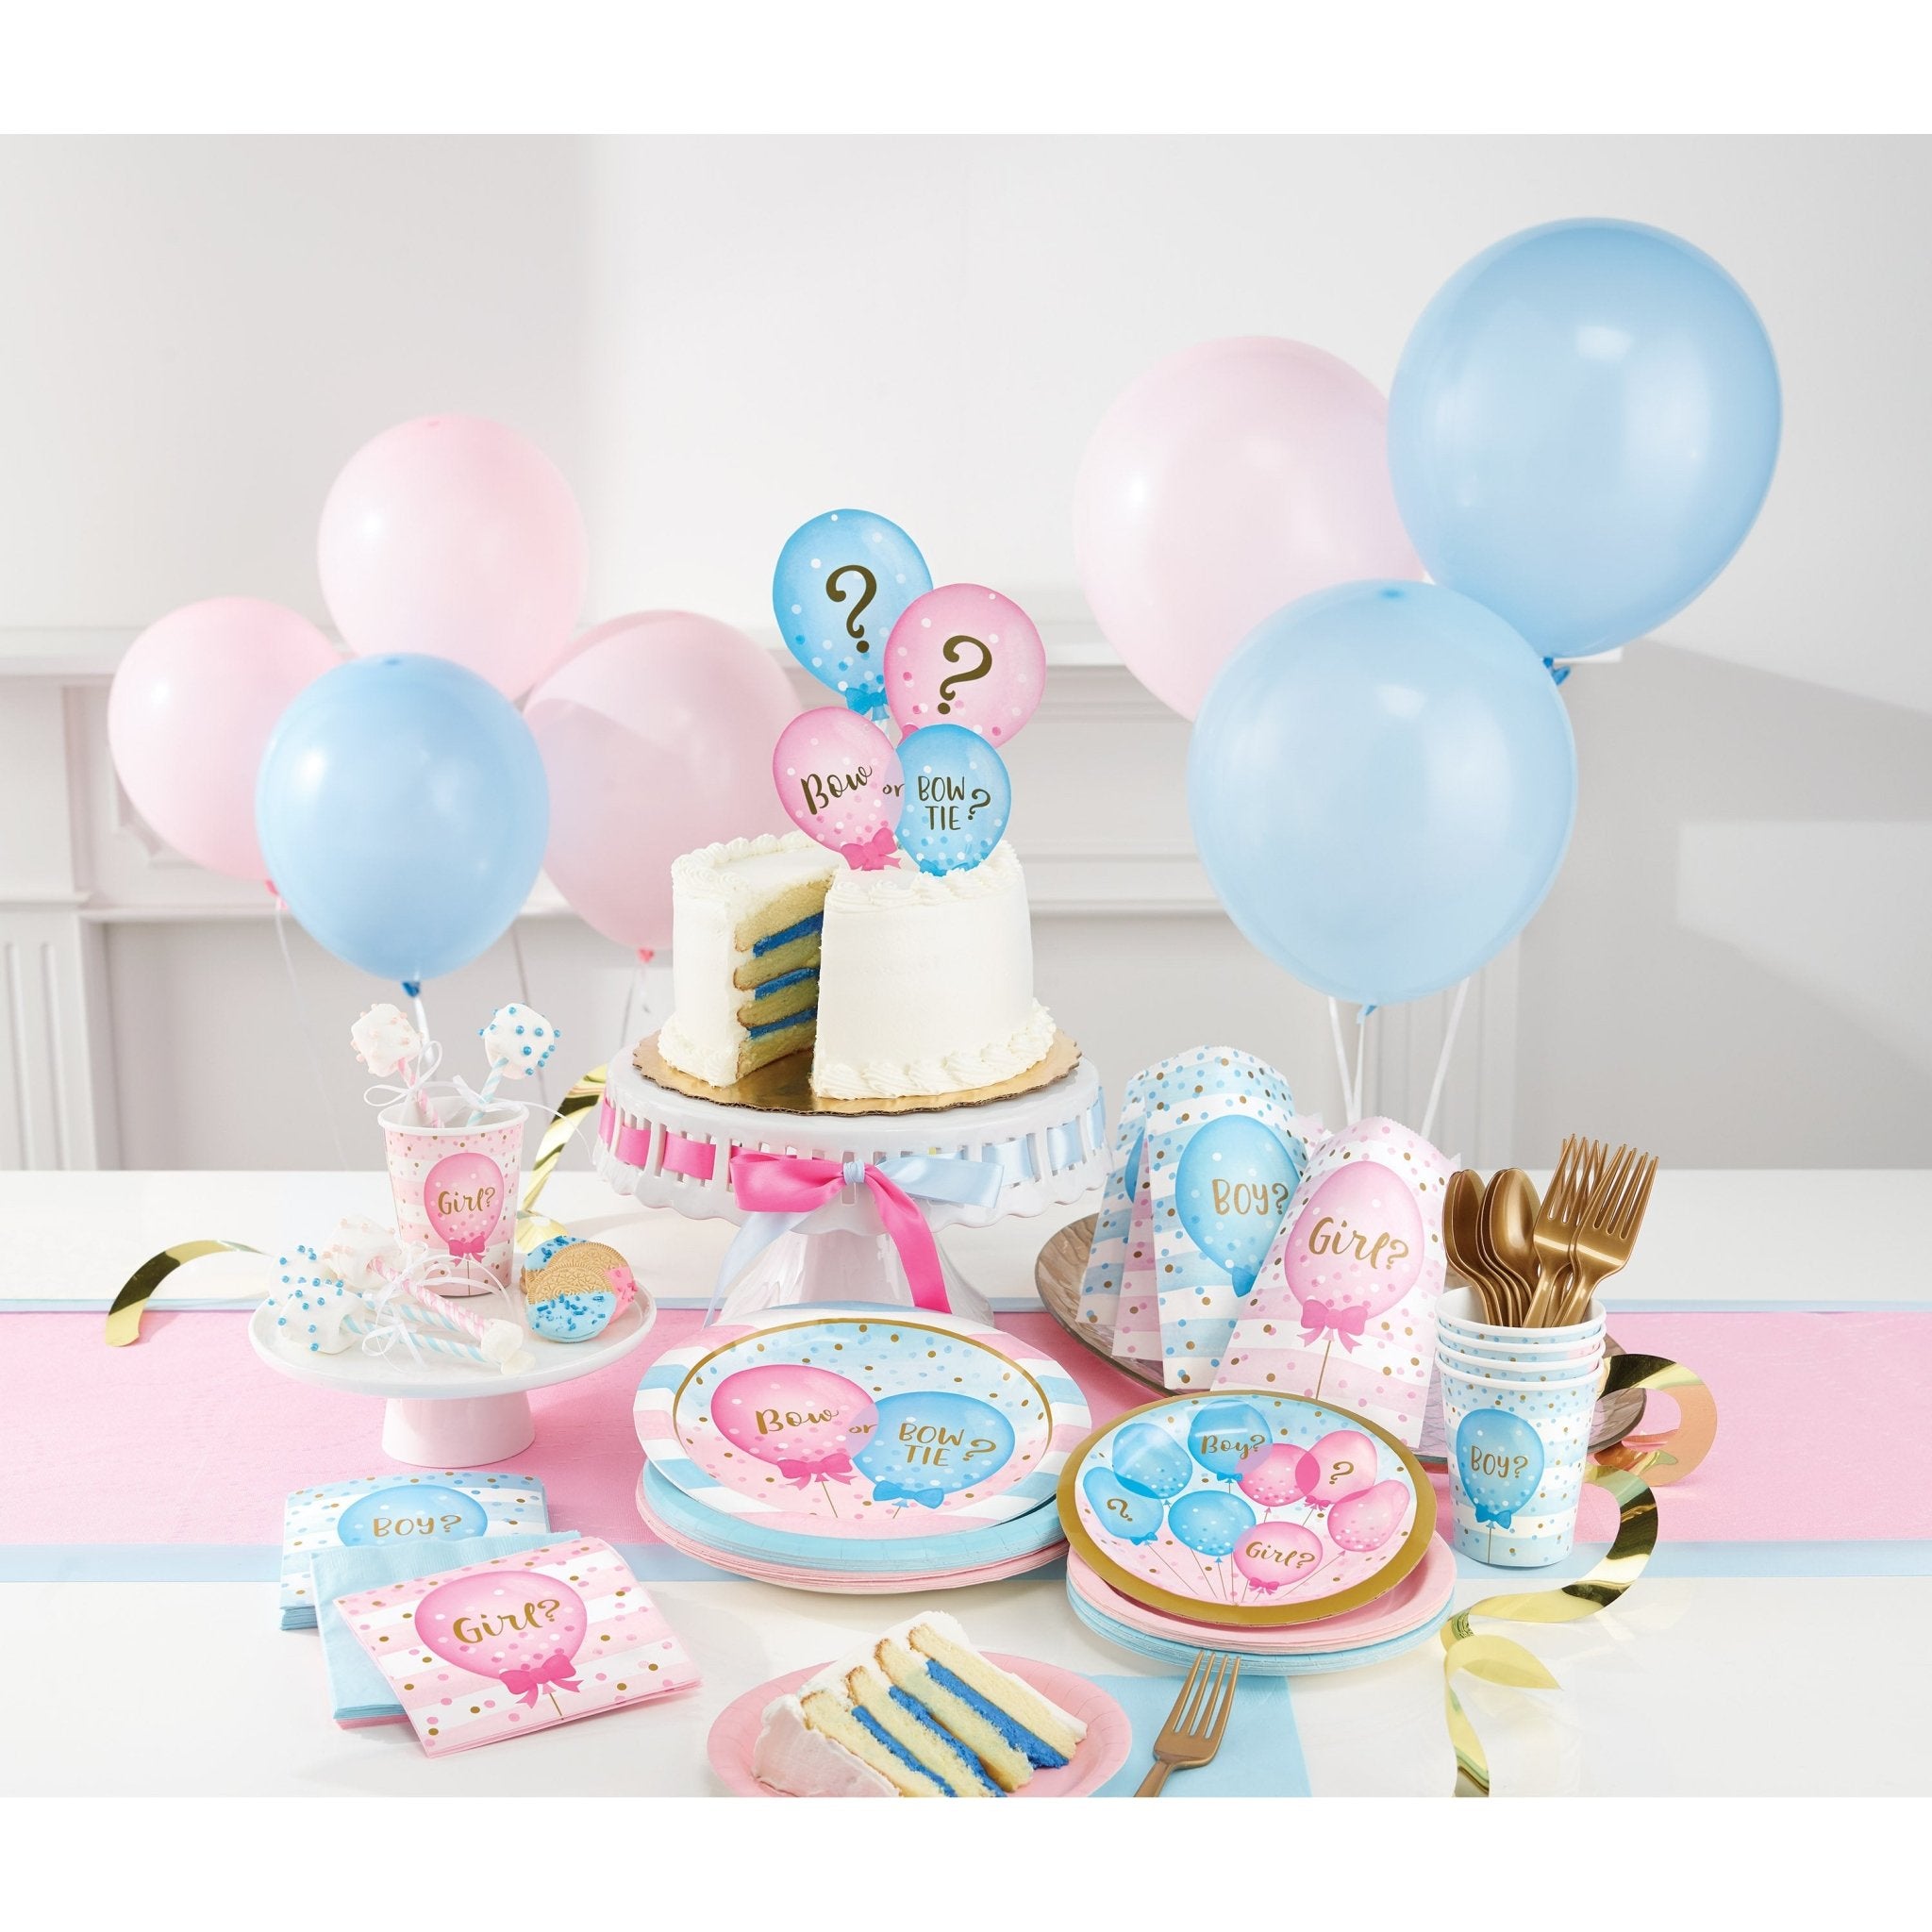 Bee Party Decorations - Stesha Party - 1st birthday girl, birthday